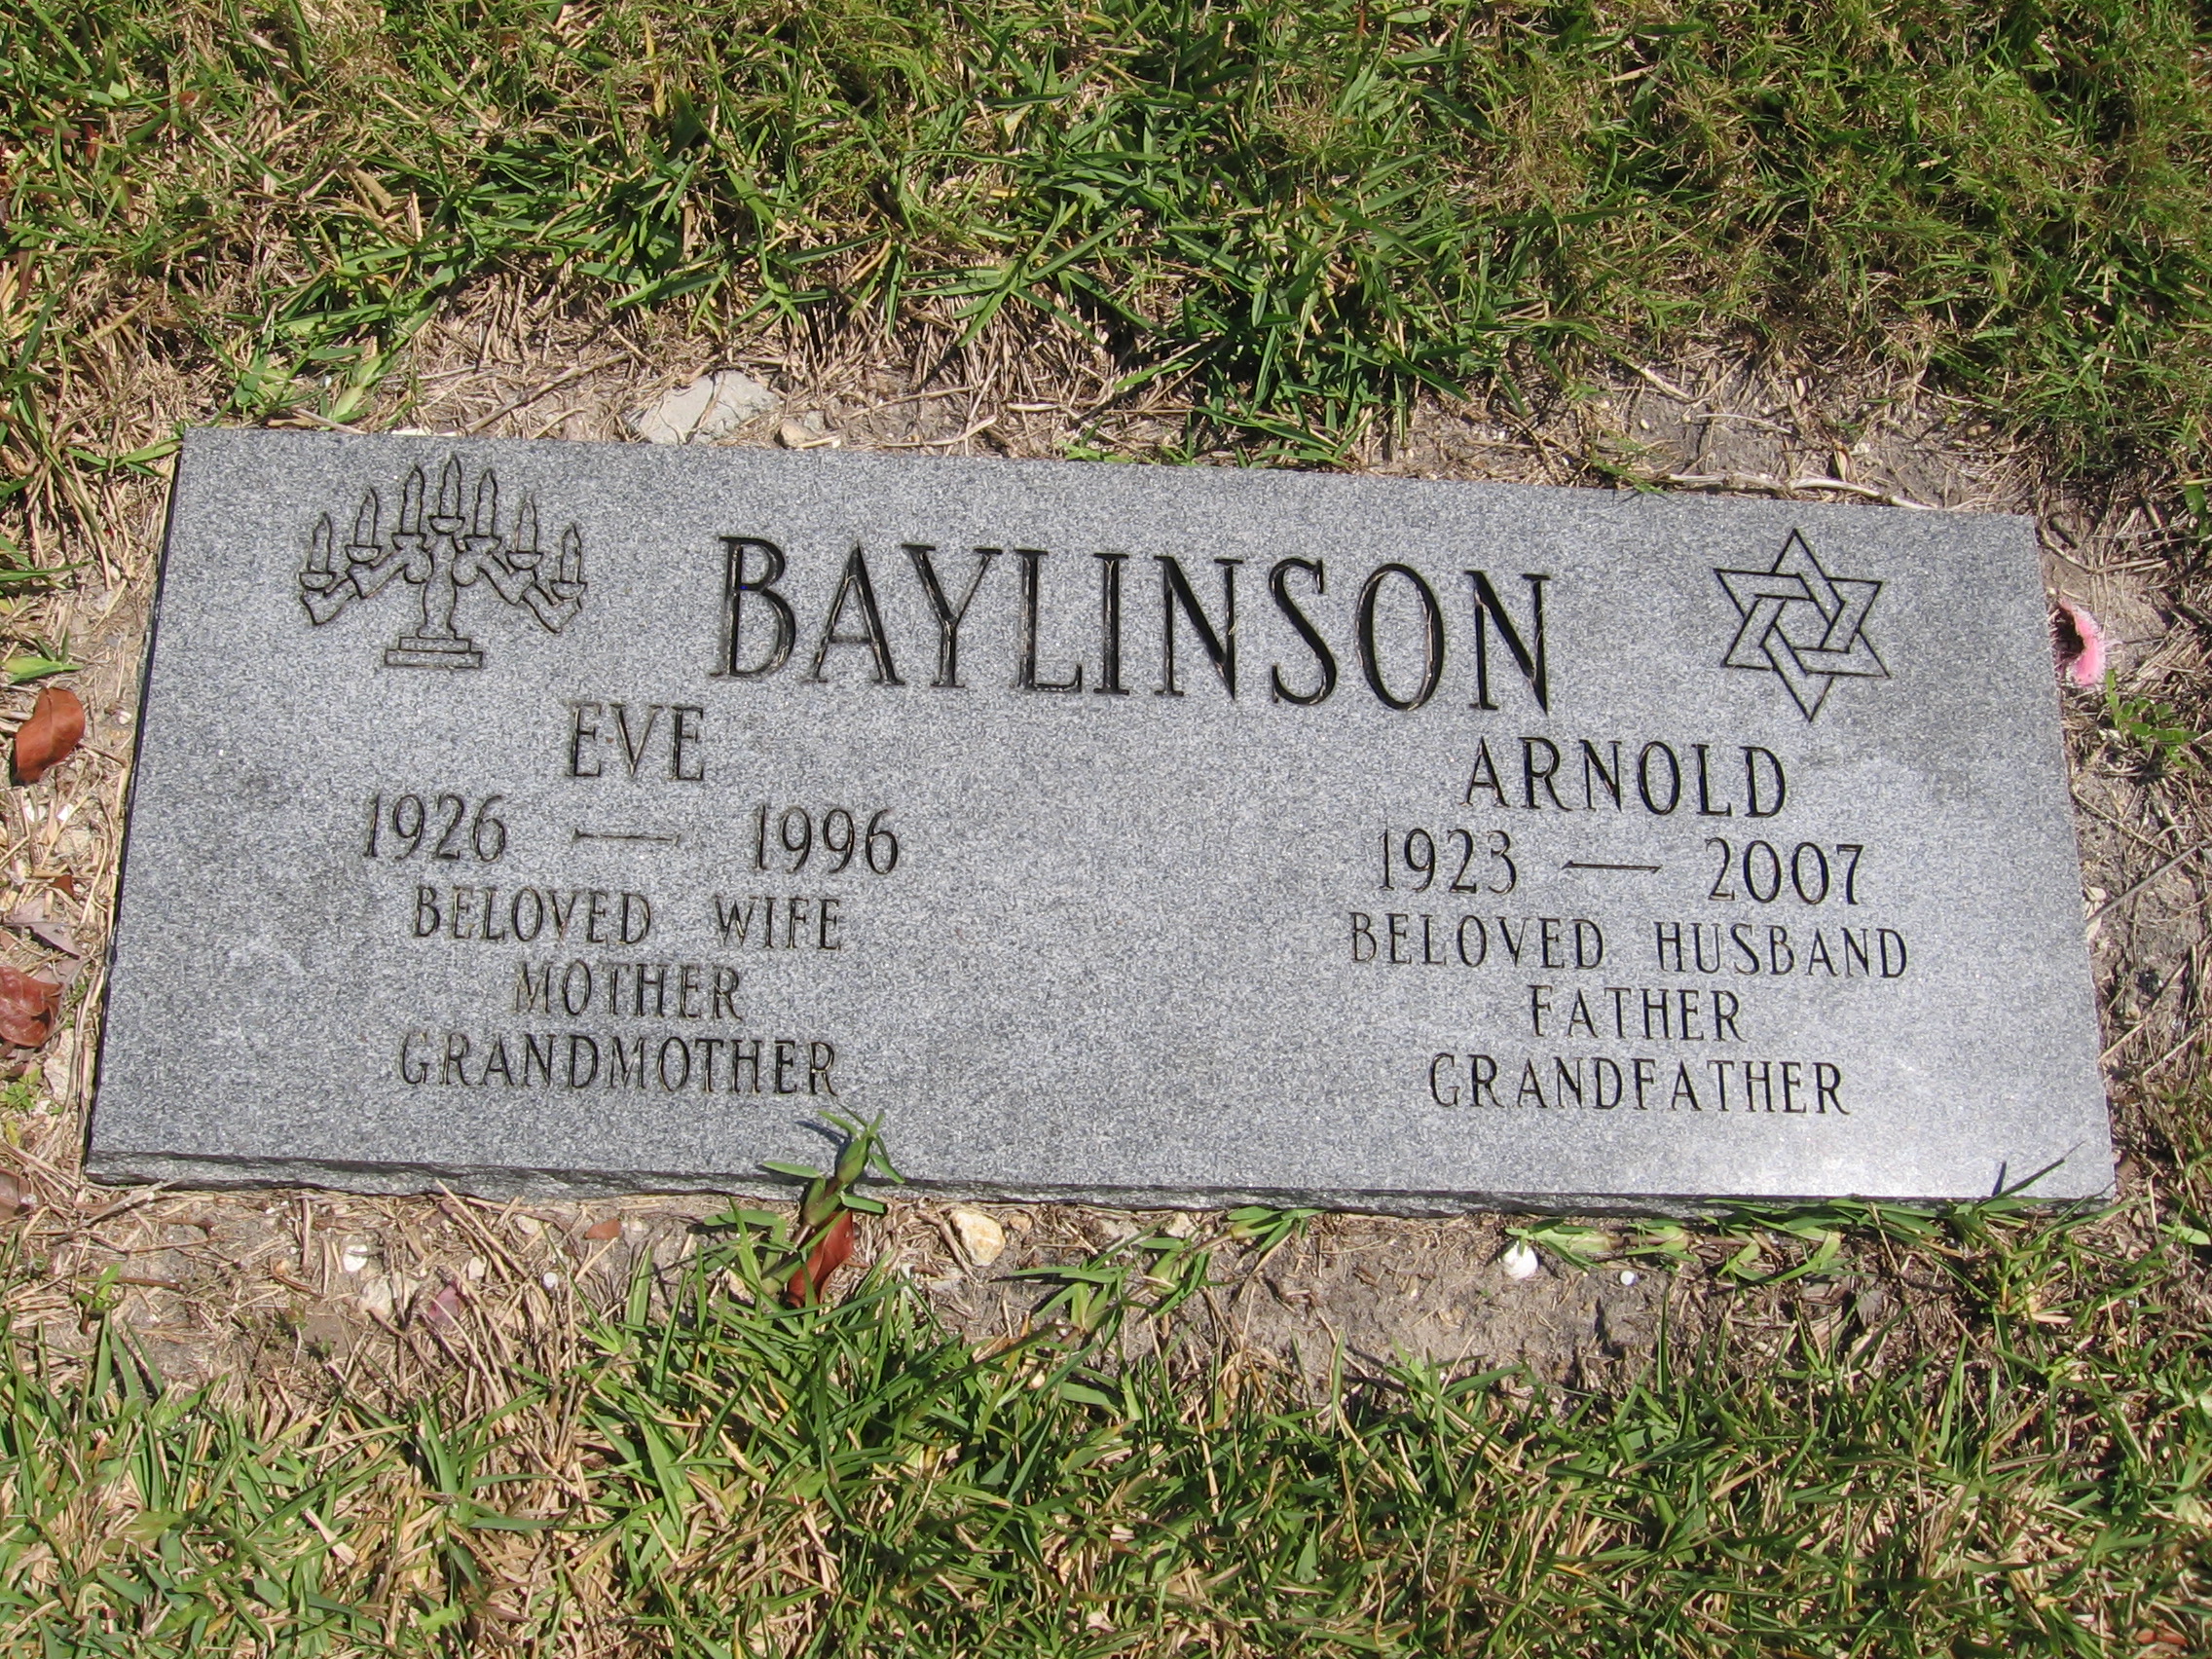 Arnold Baylinson